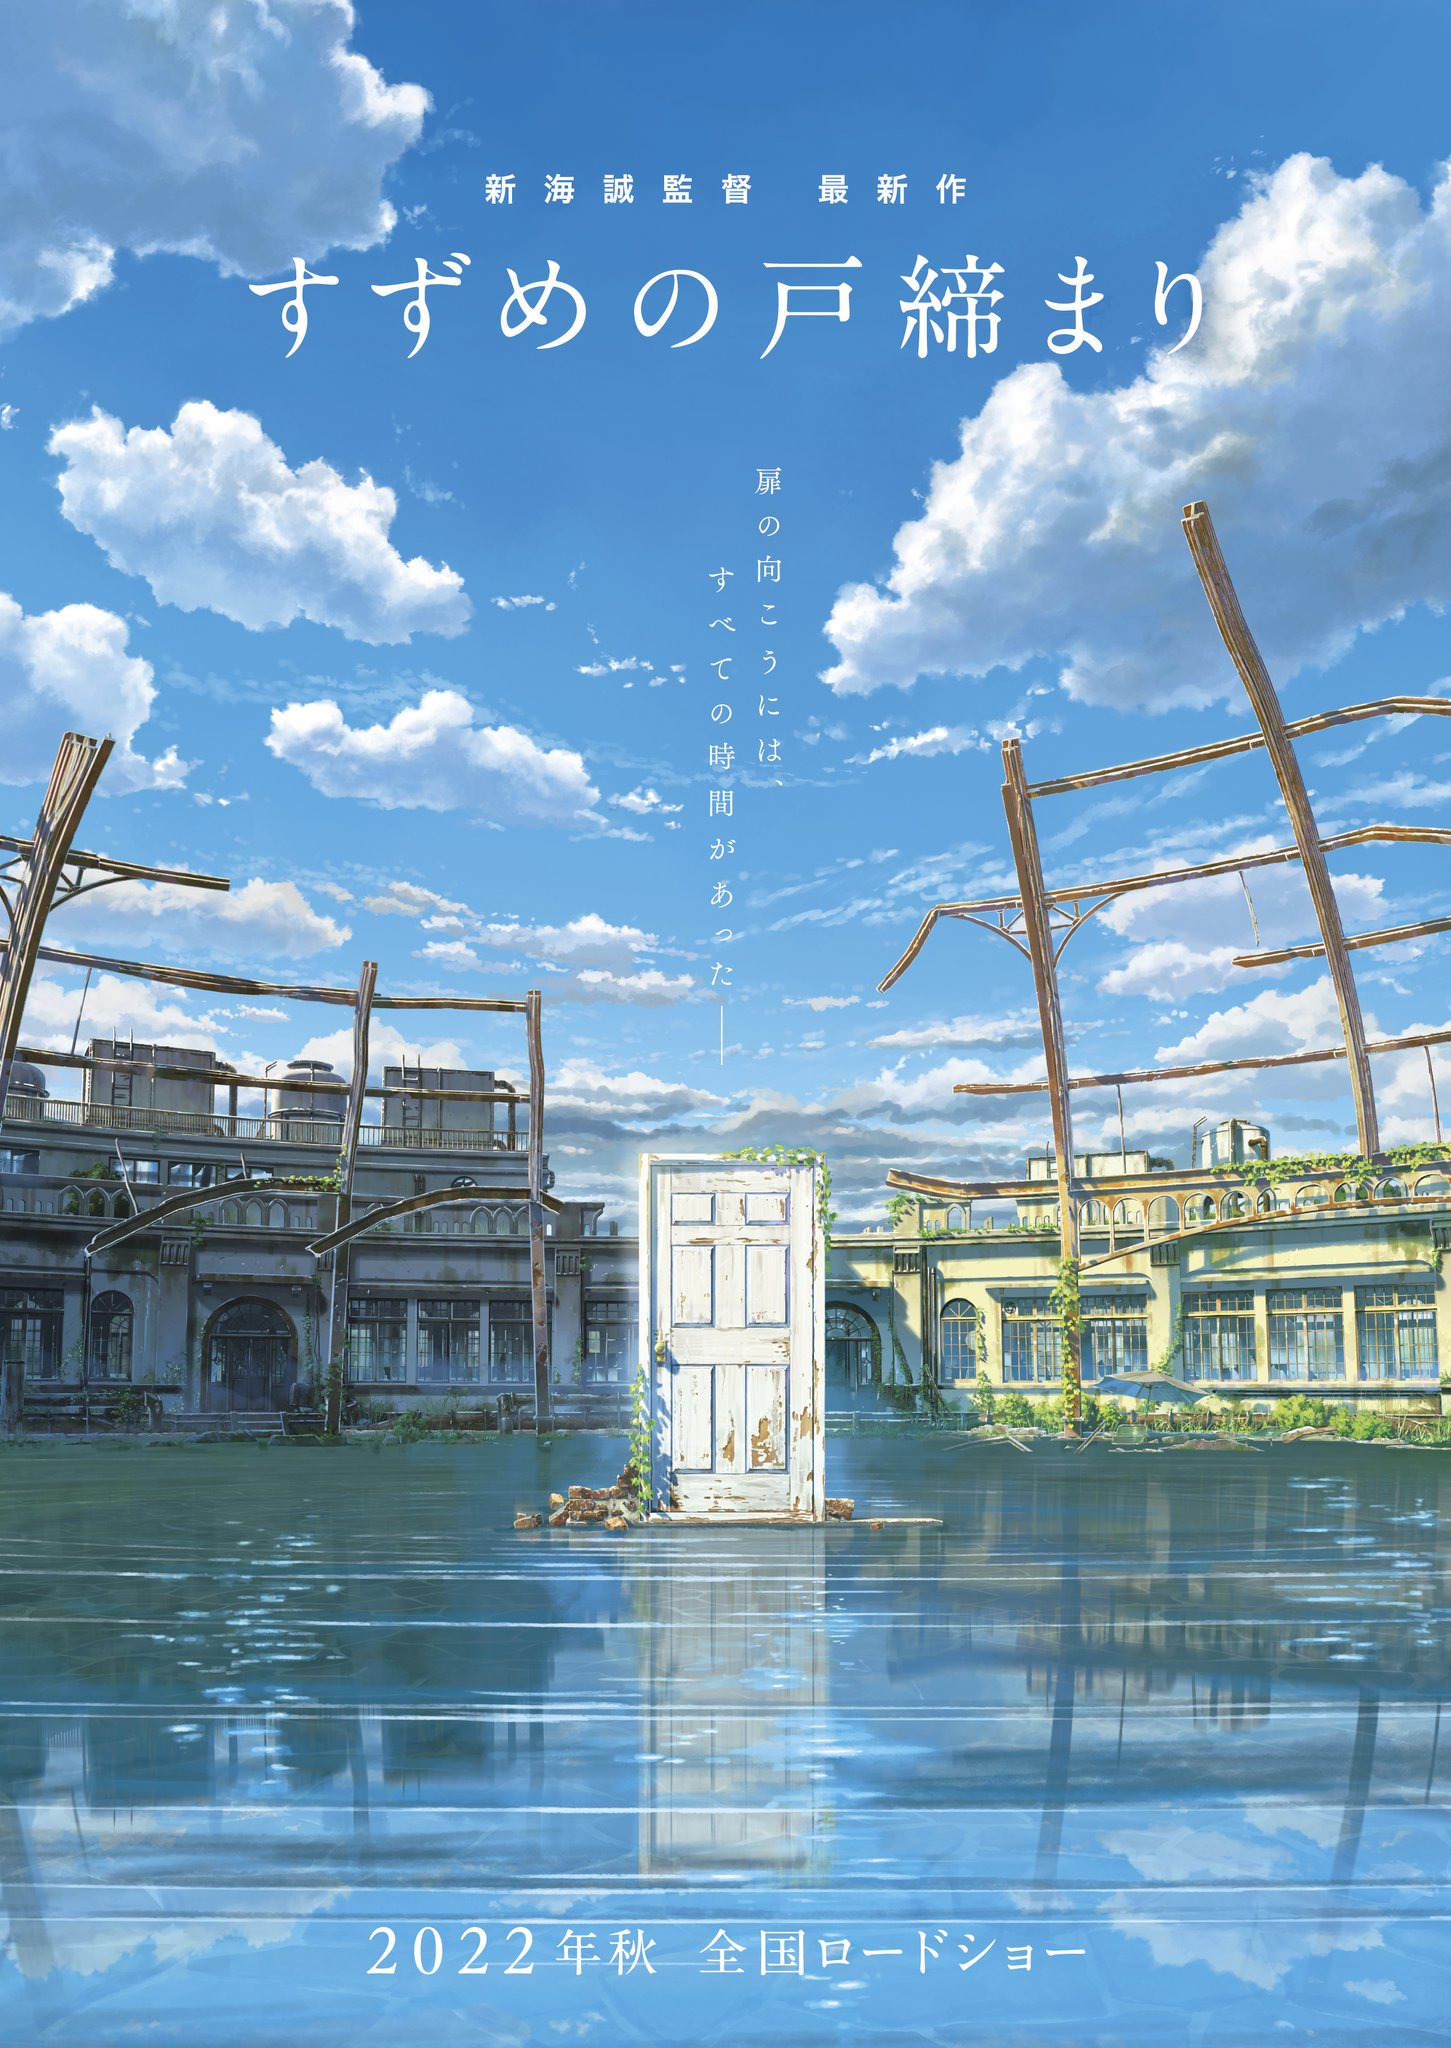 Mega Sized Movie Poster Image for Suzume no tojimari (#1 of 2)